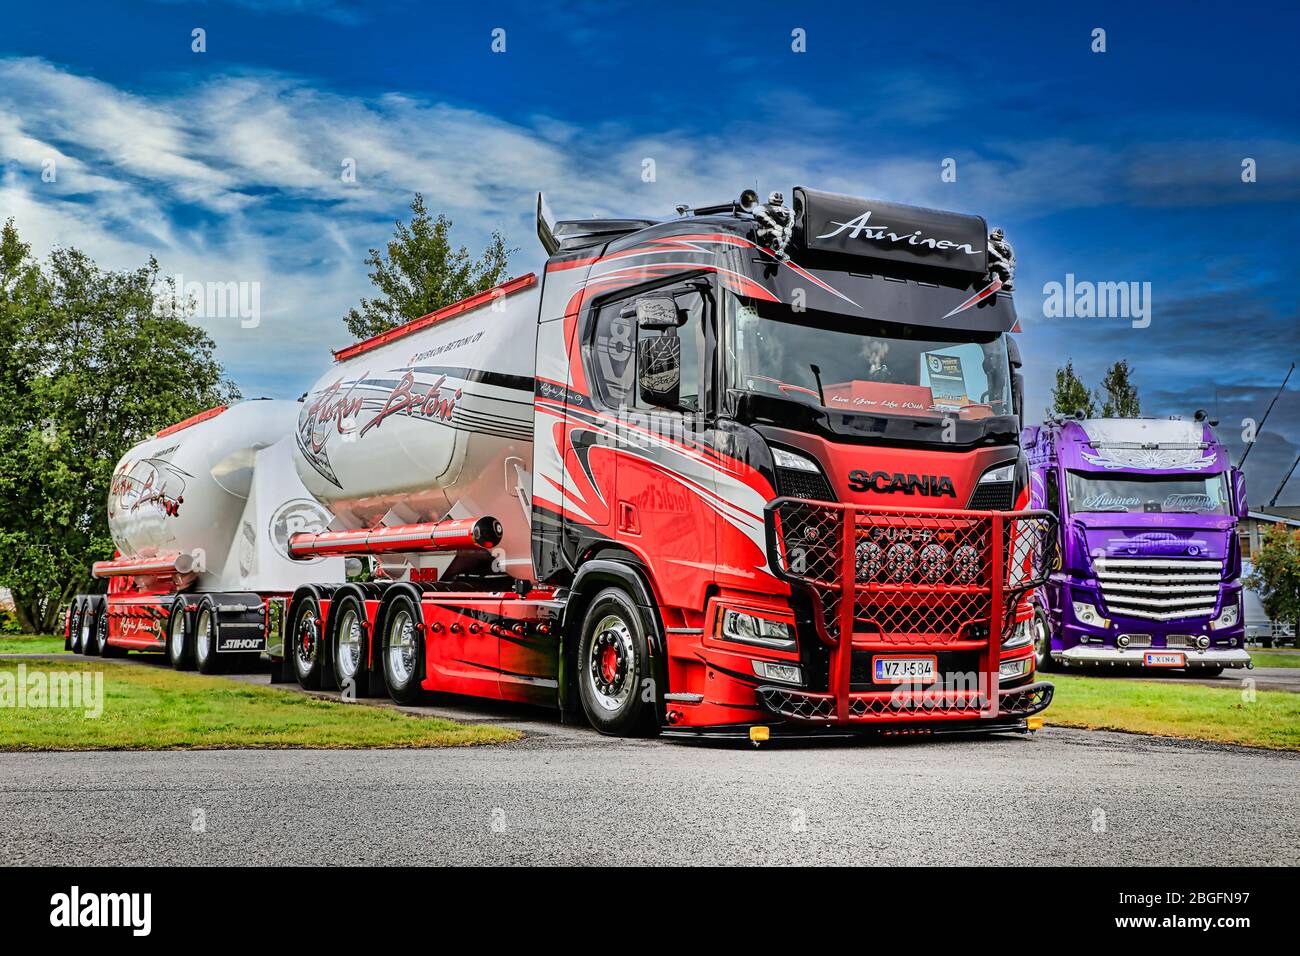 Kuljetus Auvinen Oy super trucks, category winner Scania R580 bulk transporter with Lowrider. Power Truck Show 2019. Alaharma, Finland. August 9, 2019 Stock Photo